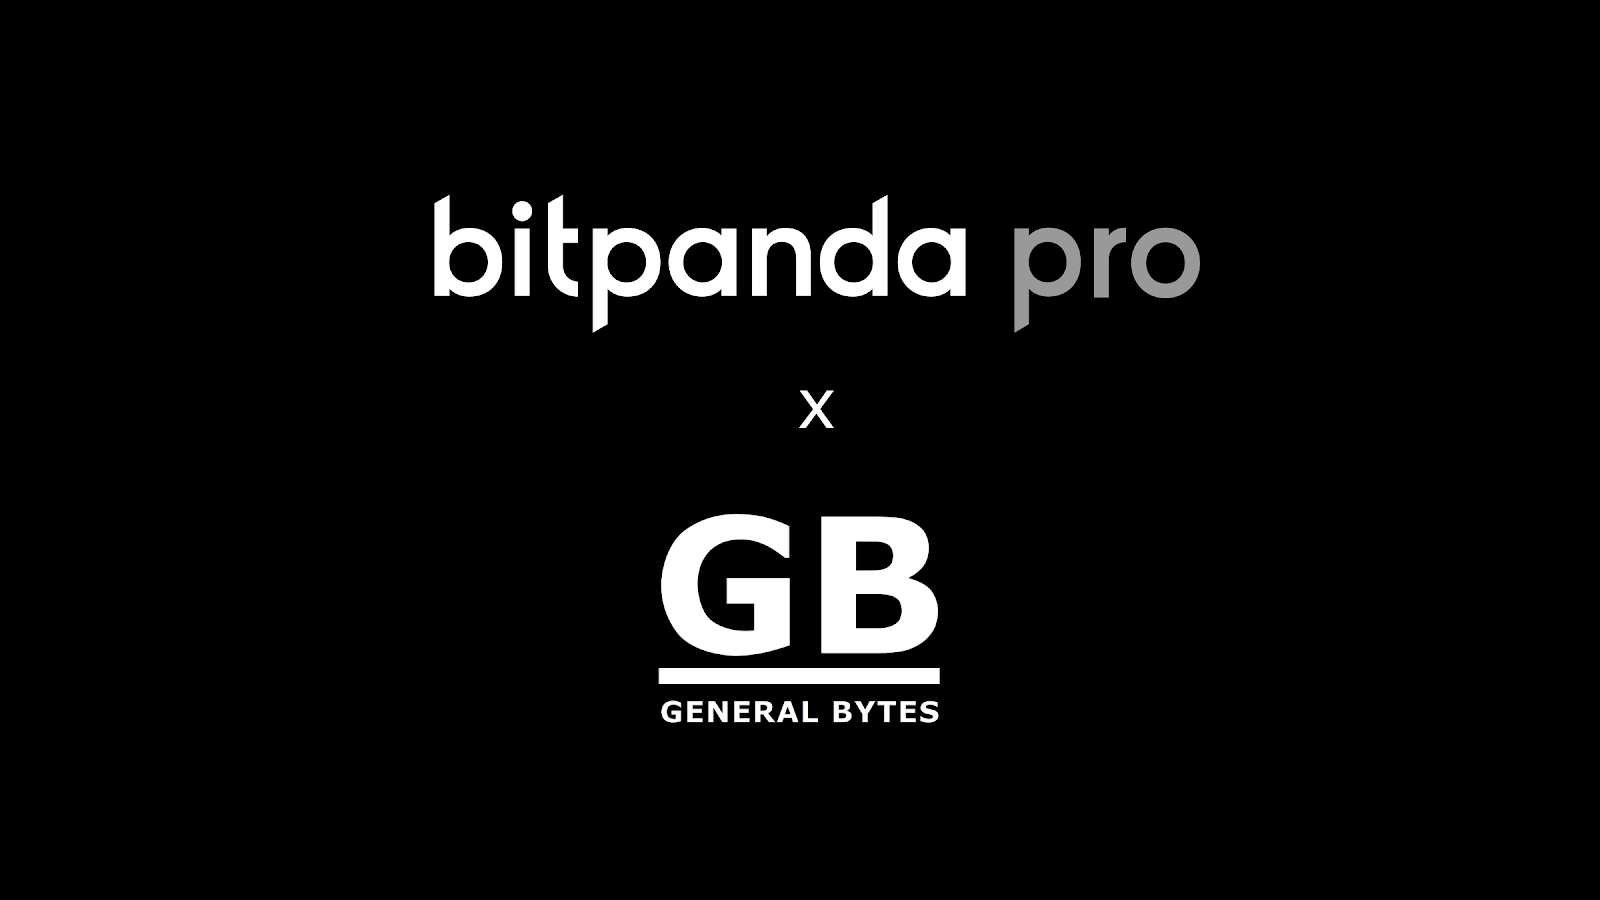 Bitpanda Pro announces partnership with GENERAL BYTES